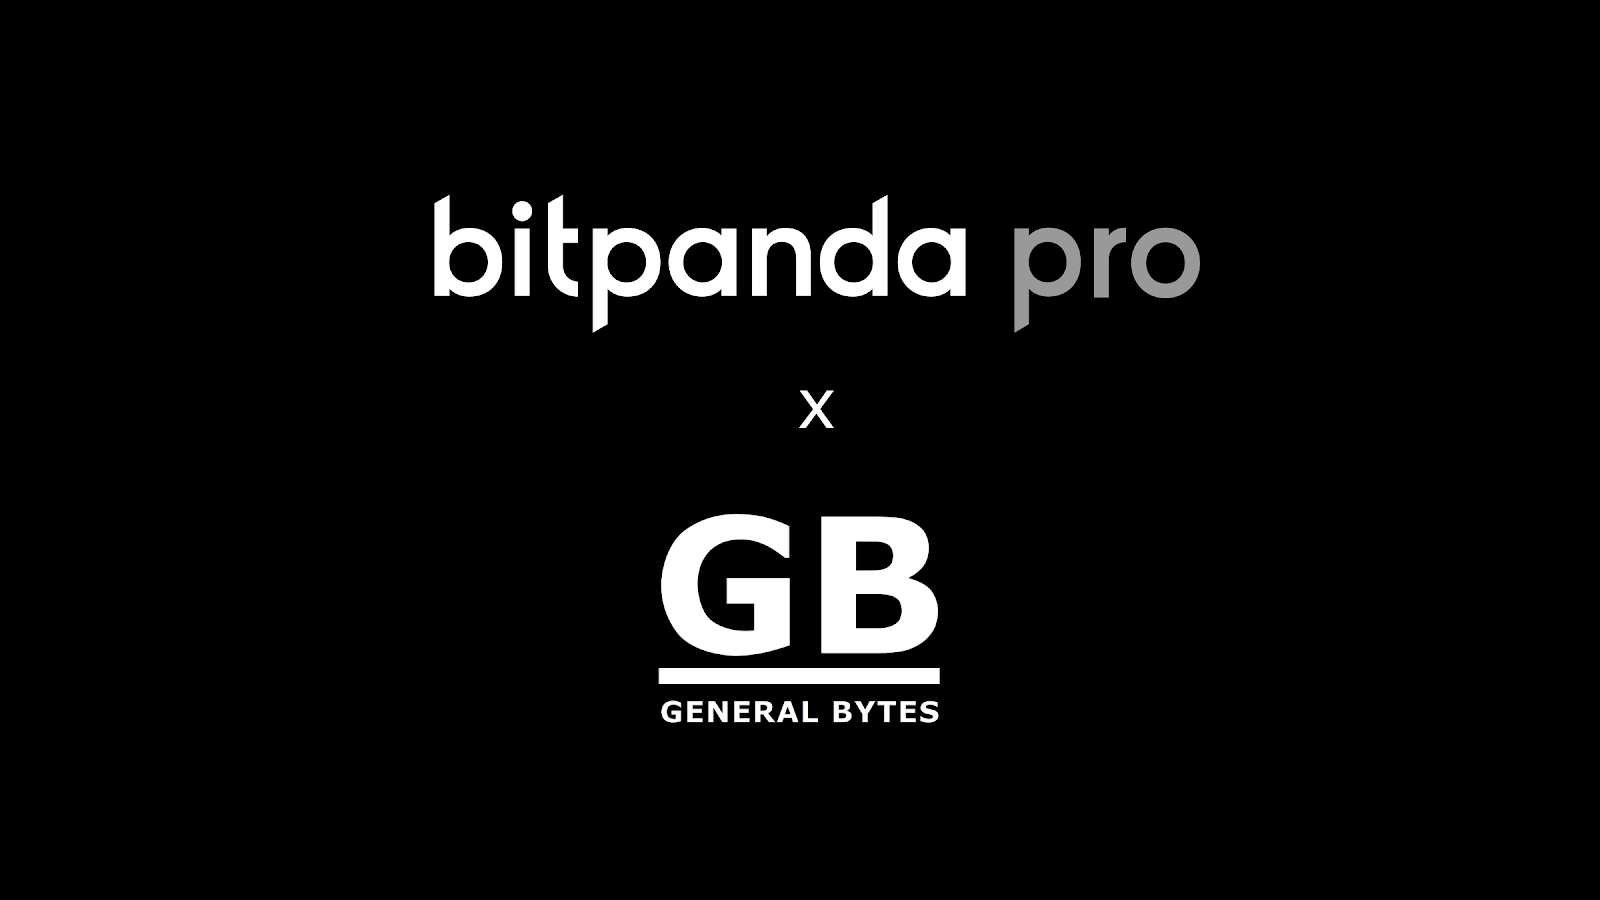 Bitpanda Pro announces partnership with GENERAL BYTES